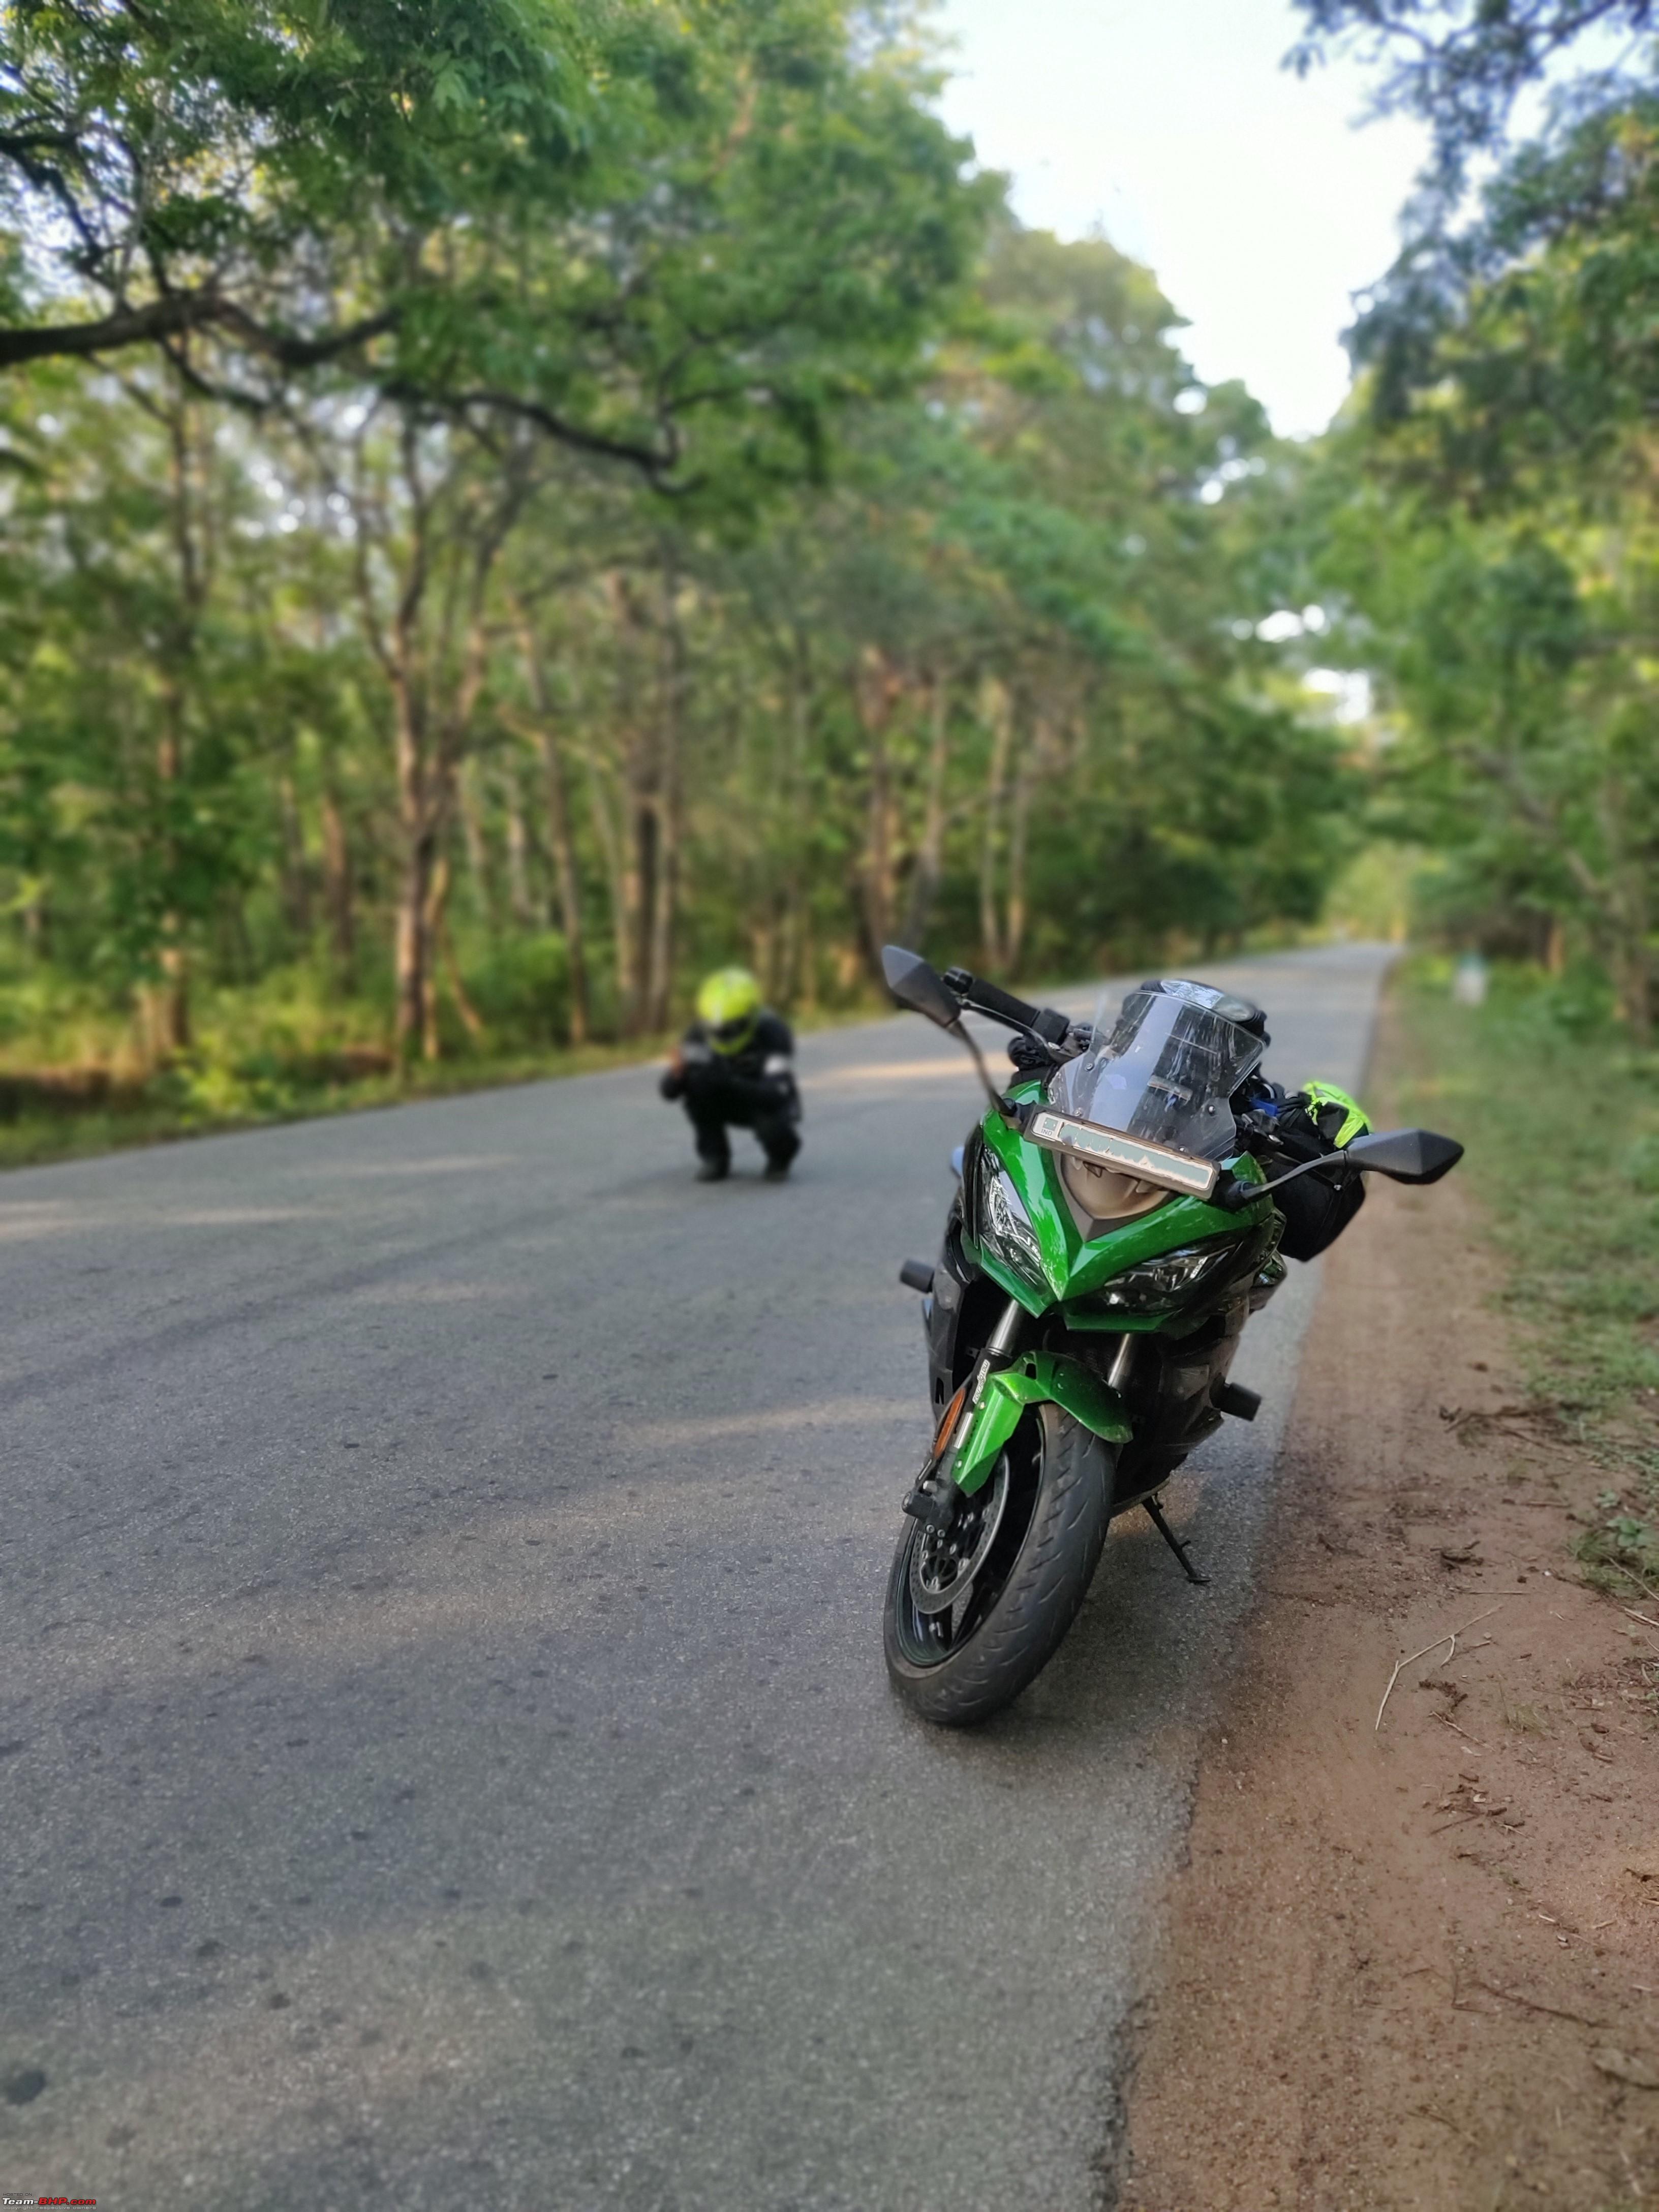 https://www.team-bhp.com/forum/attachments/superbikes-imports/2551512d1703922756-kawasaki-ninja-1000sx-ownership-review-touring-2-up-my-dream-machine-12-beautiful-roads-2.jpg